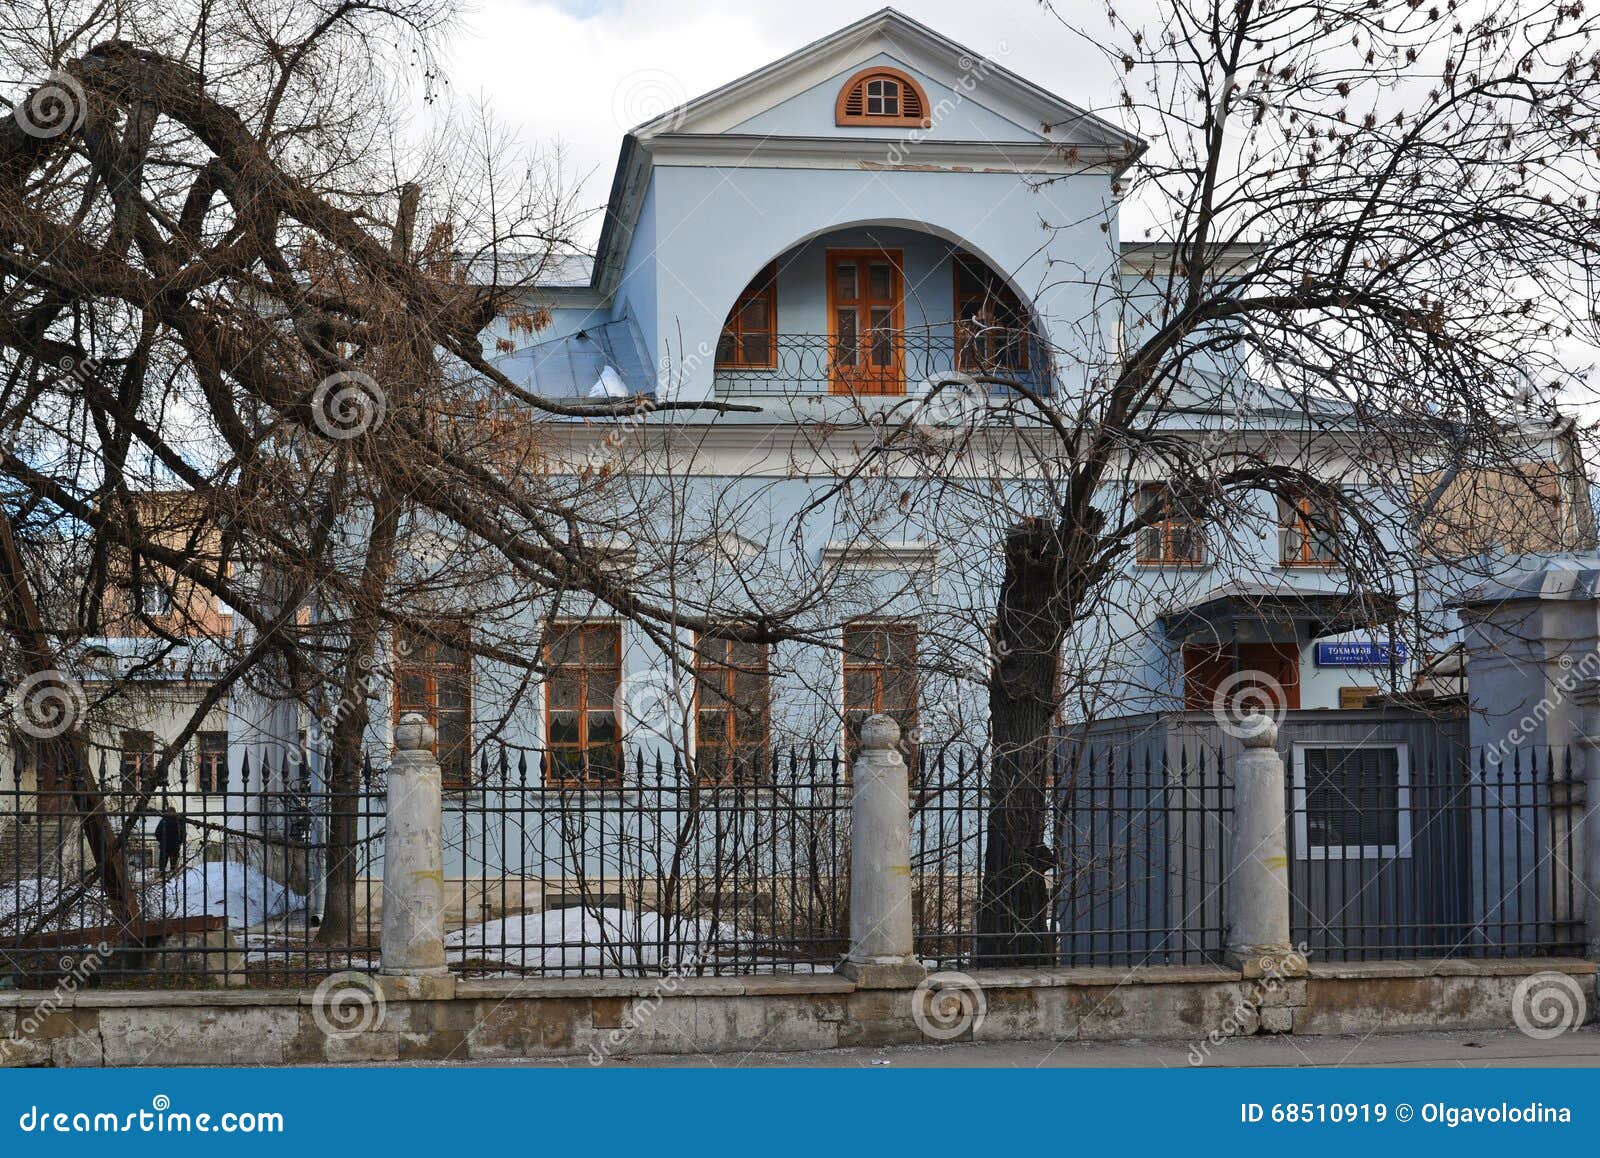 urban manor xviii-xix centuries in tokmakov lane in moscow, russia